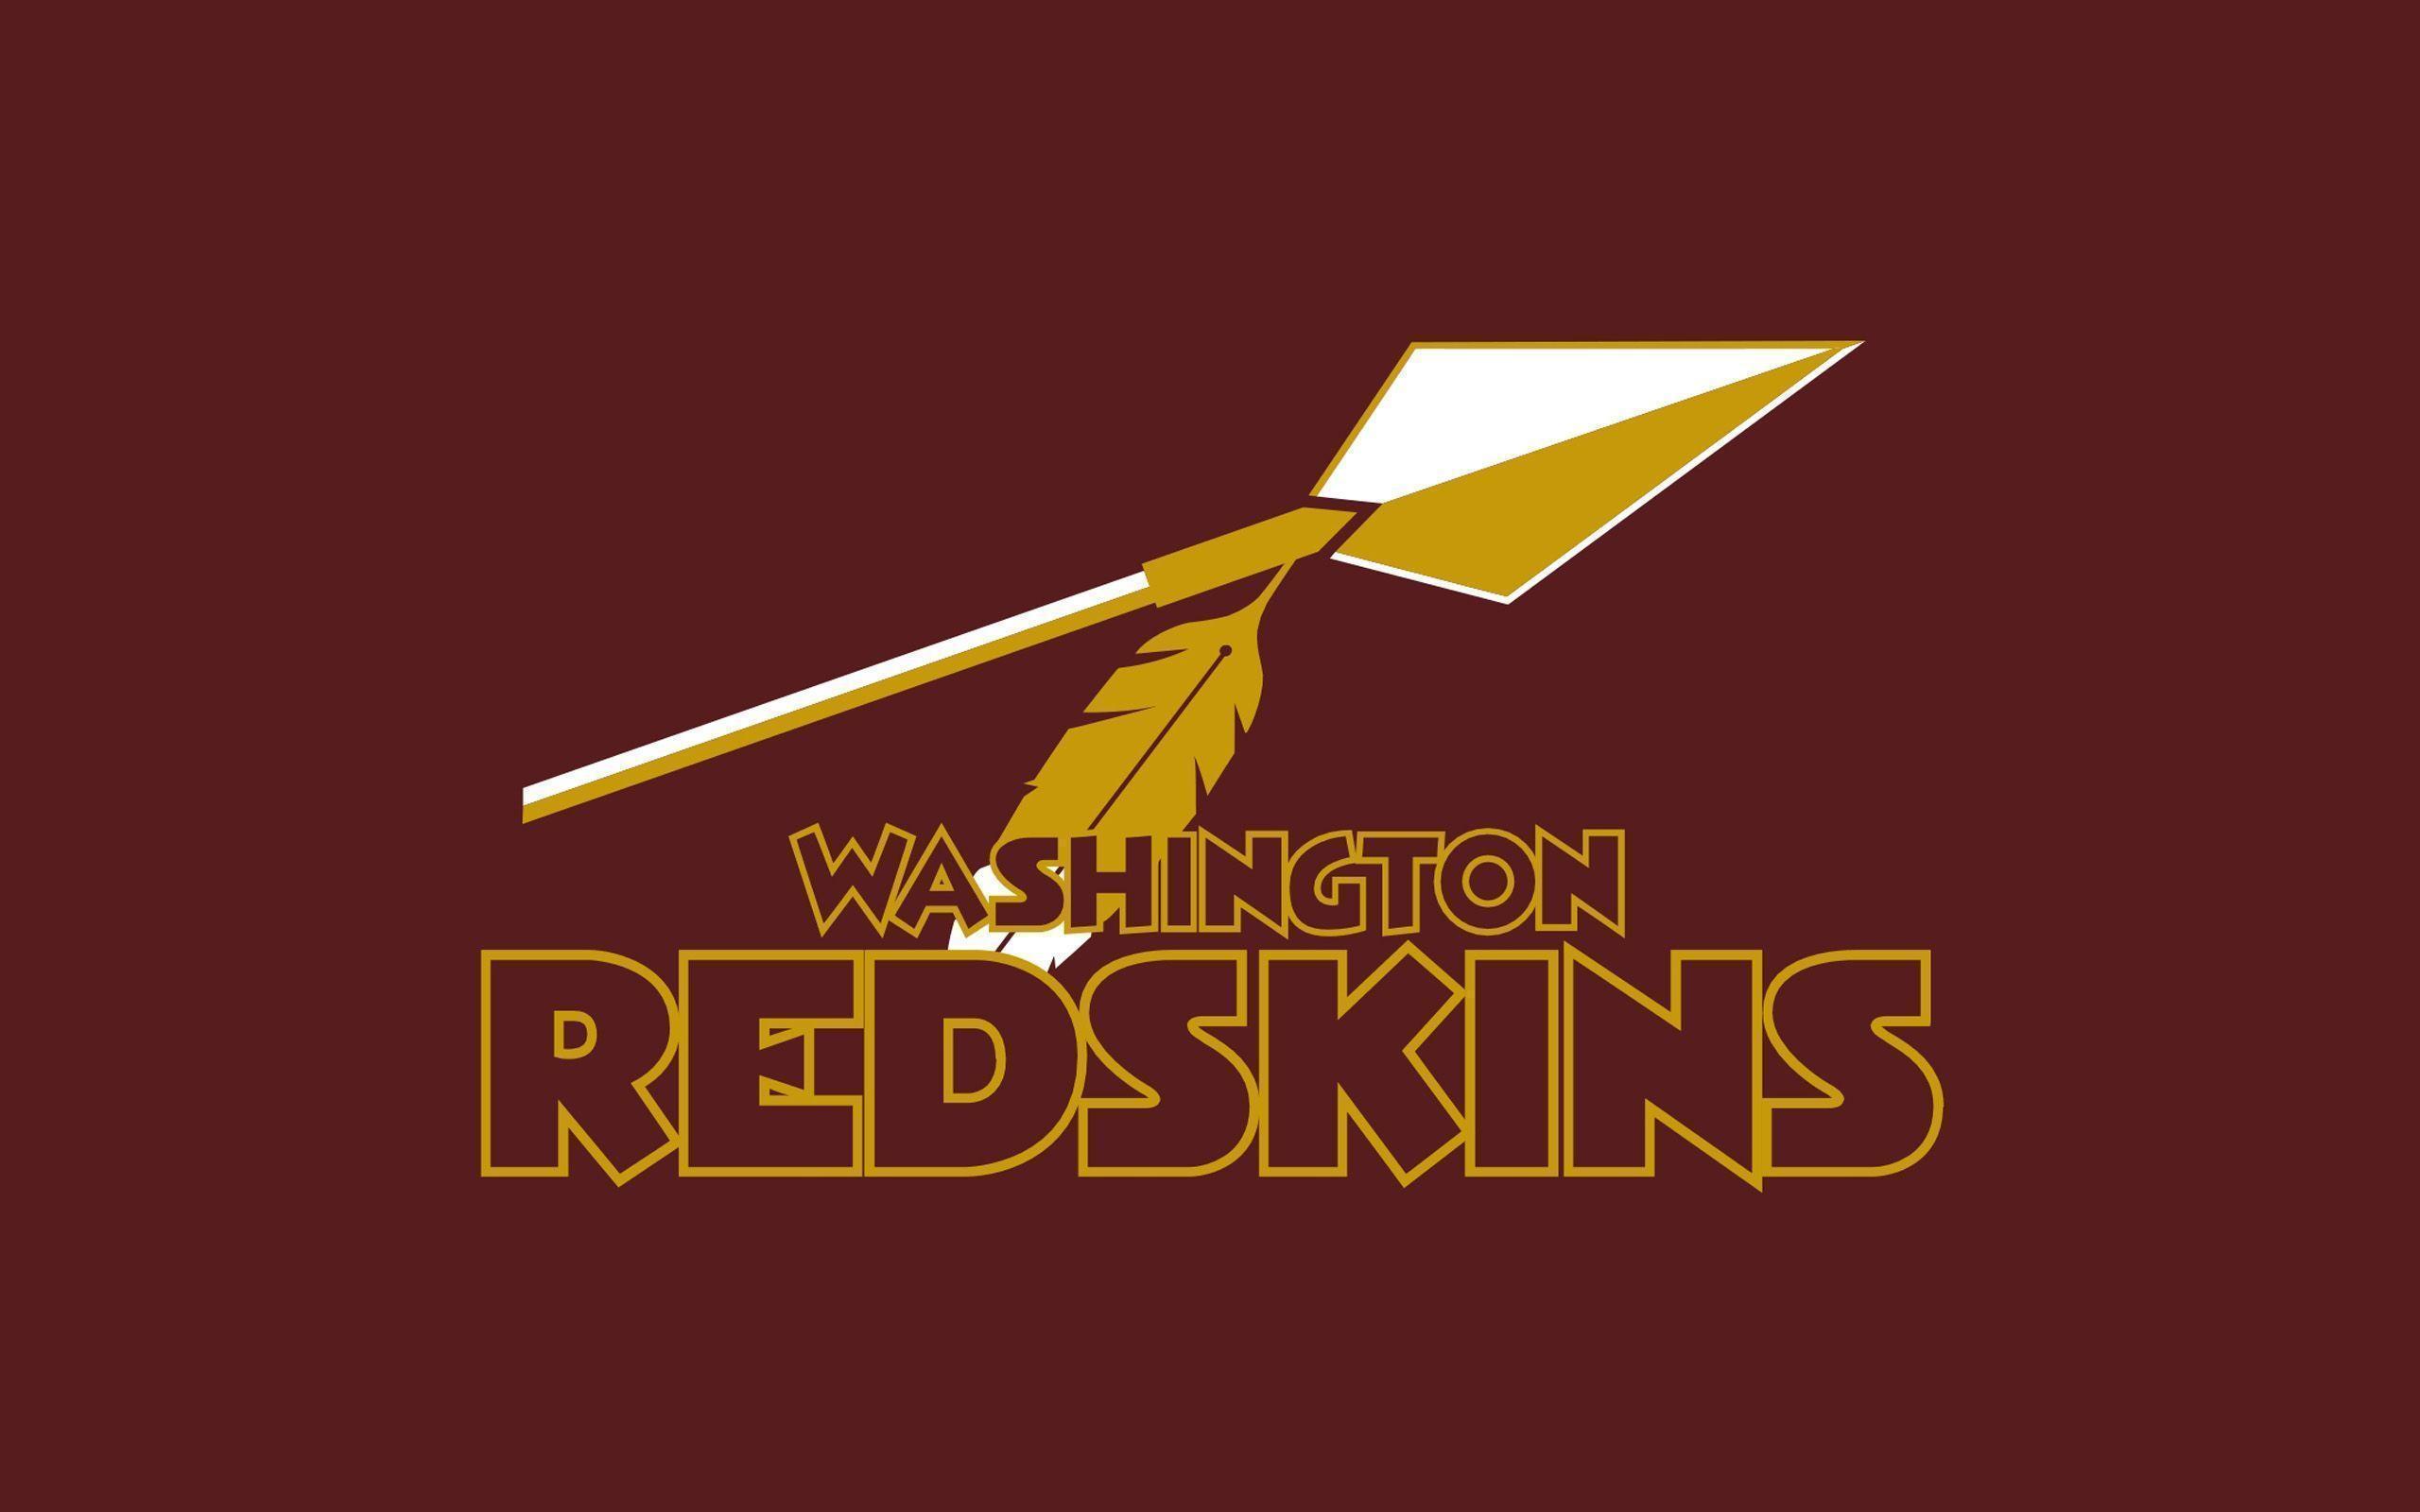 Washington Redskins 2014 NFL Logo Wallpaper Wide or HD. Sports